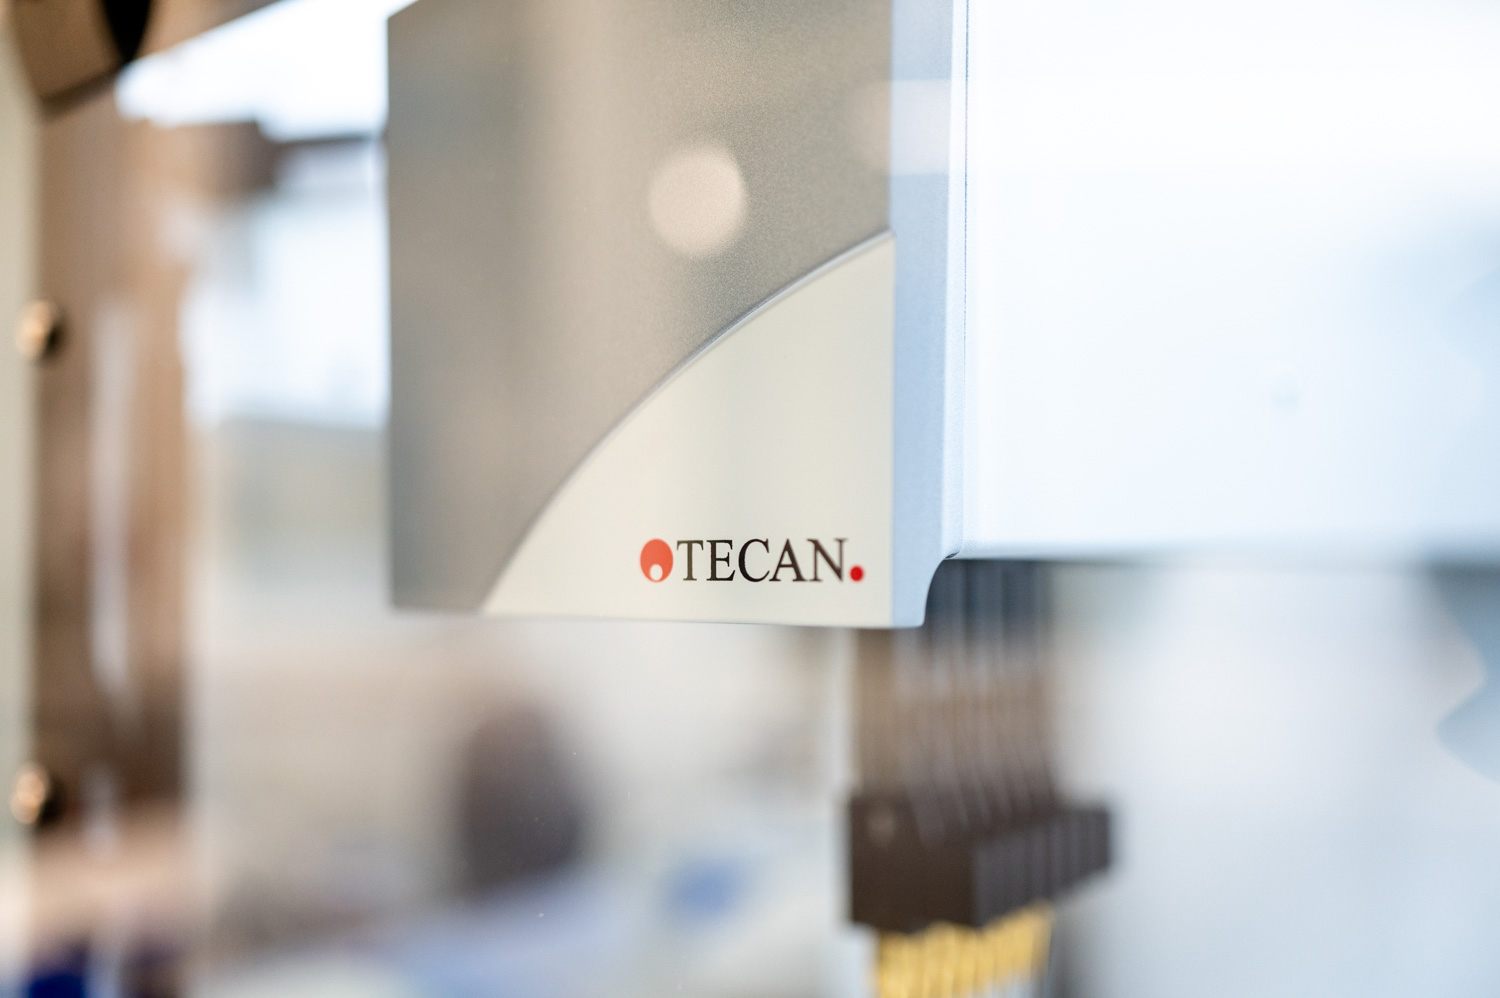 A close up of a Tecan liquid handler, focused on the Tecan logo